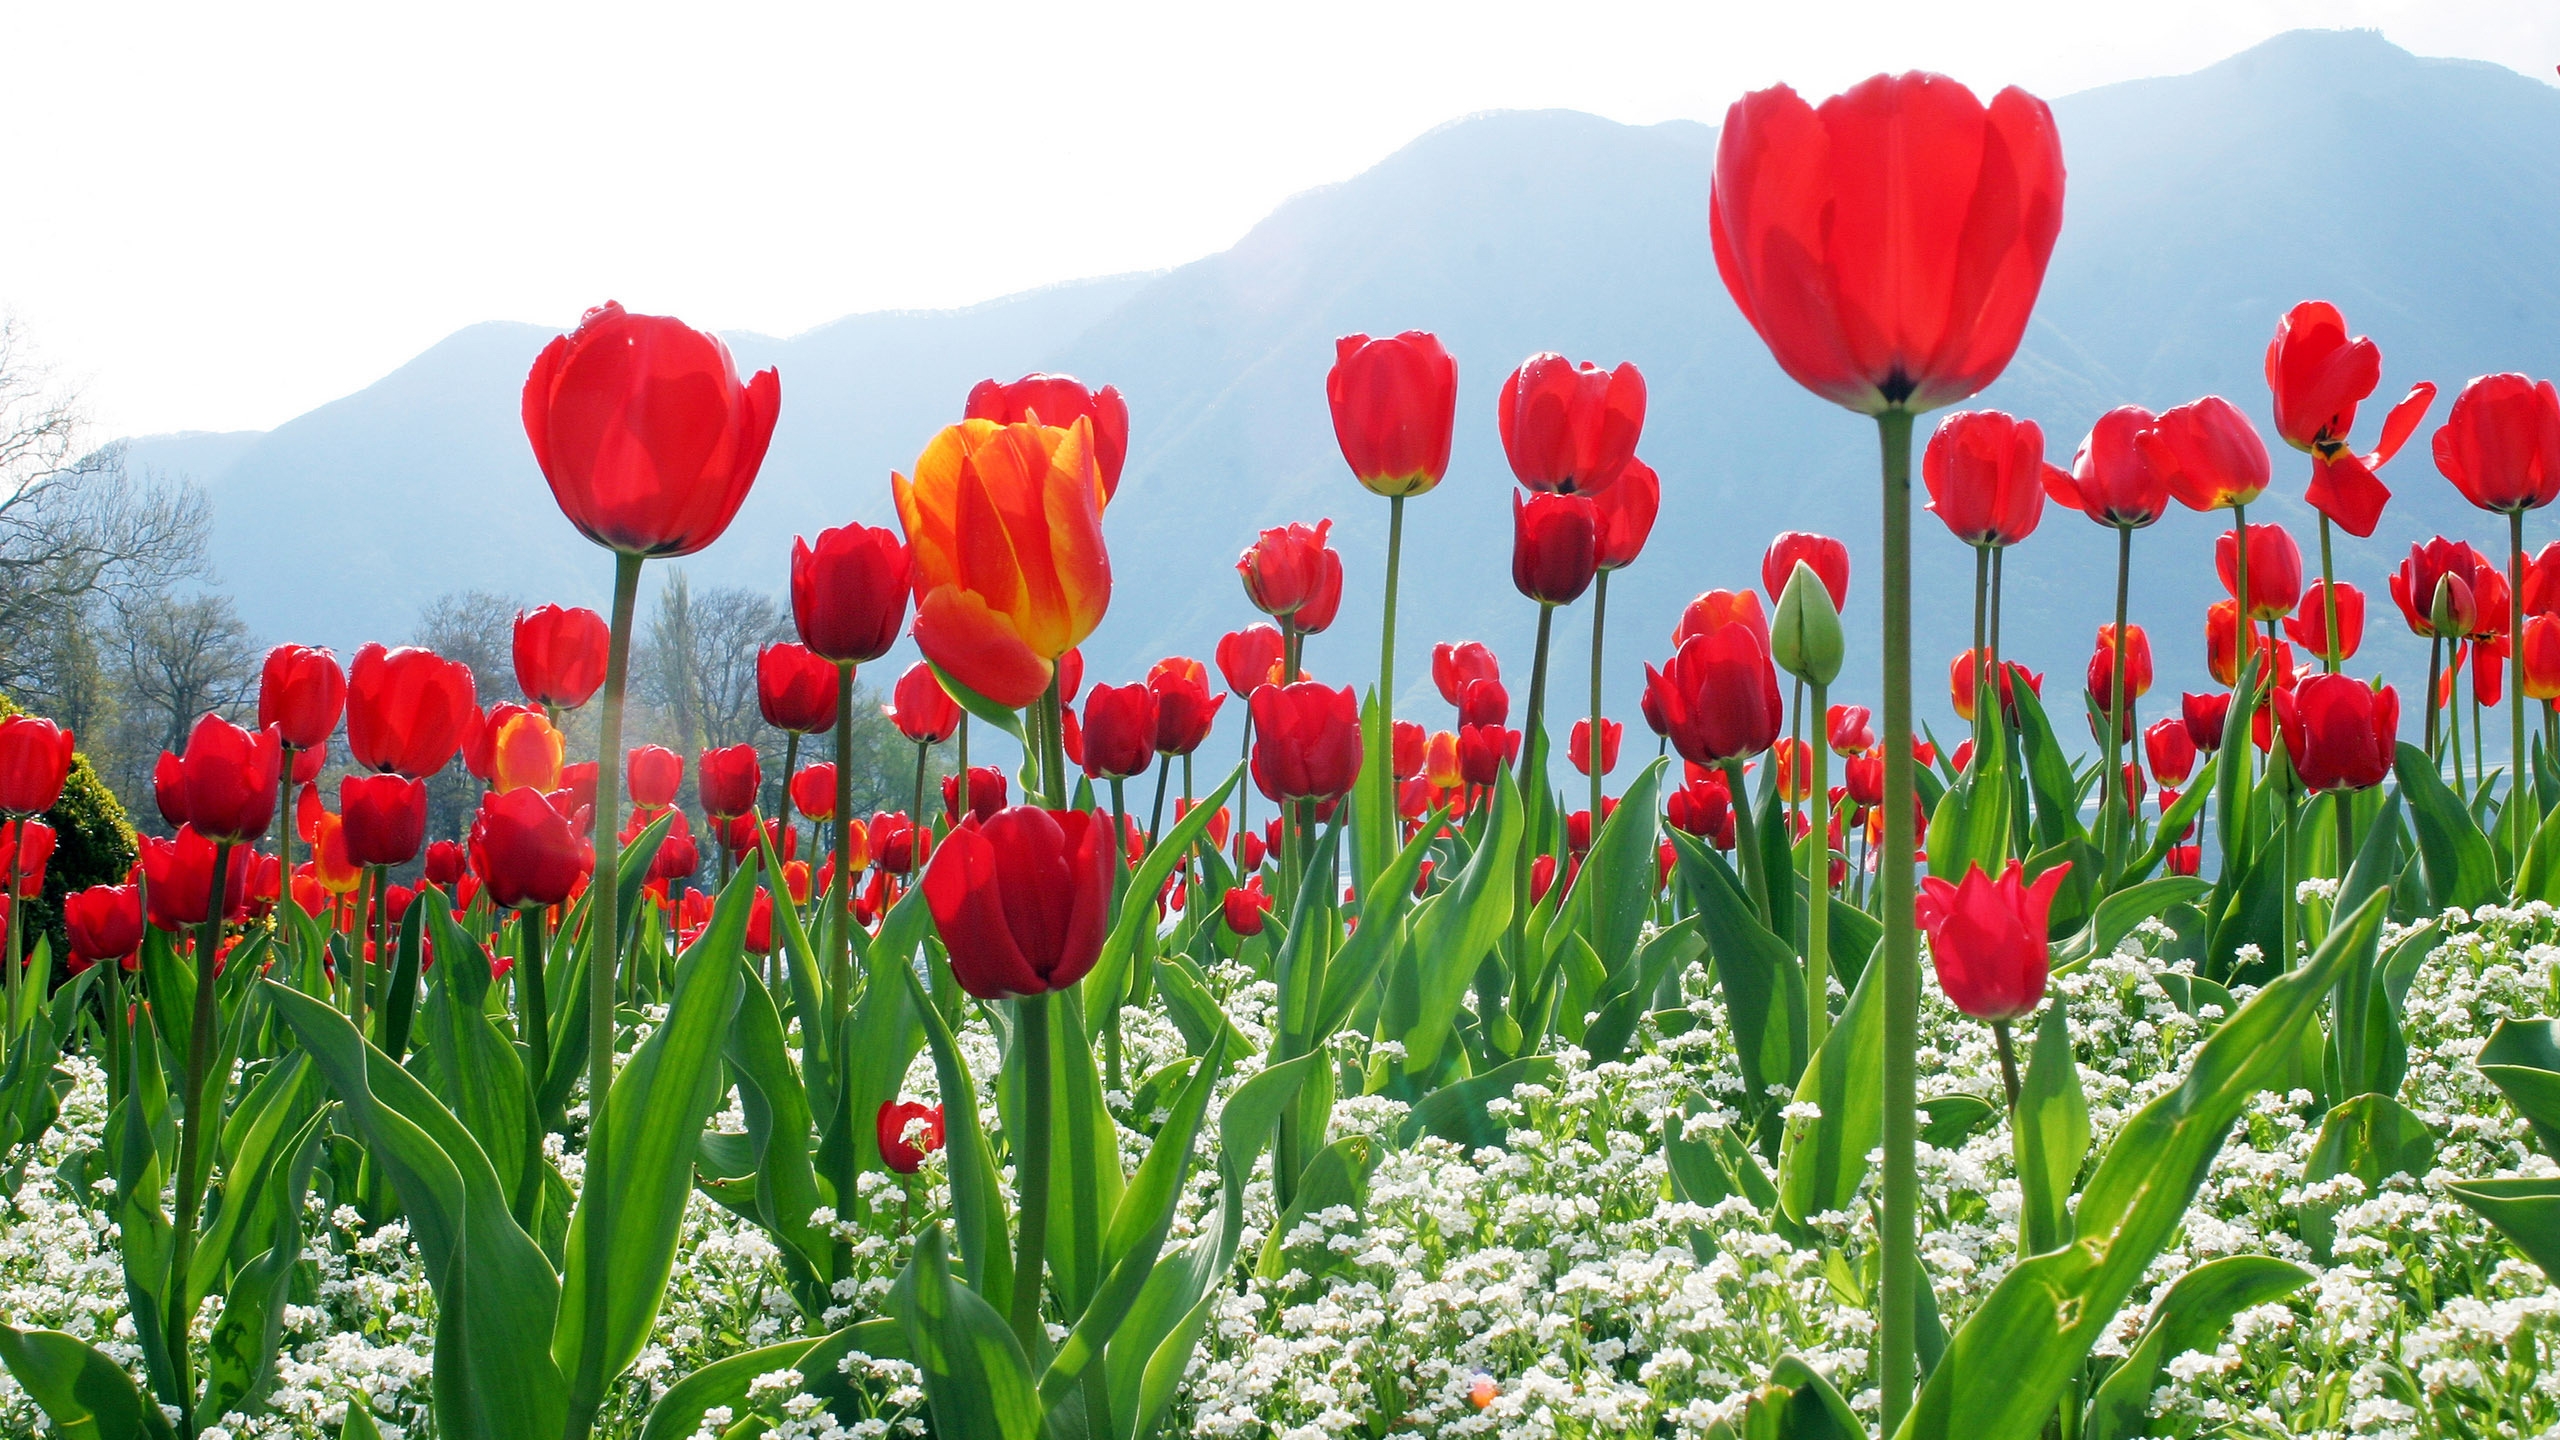 Tulips Flower Plantation for 2560x1440 HDTV resolution